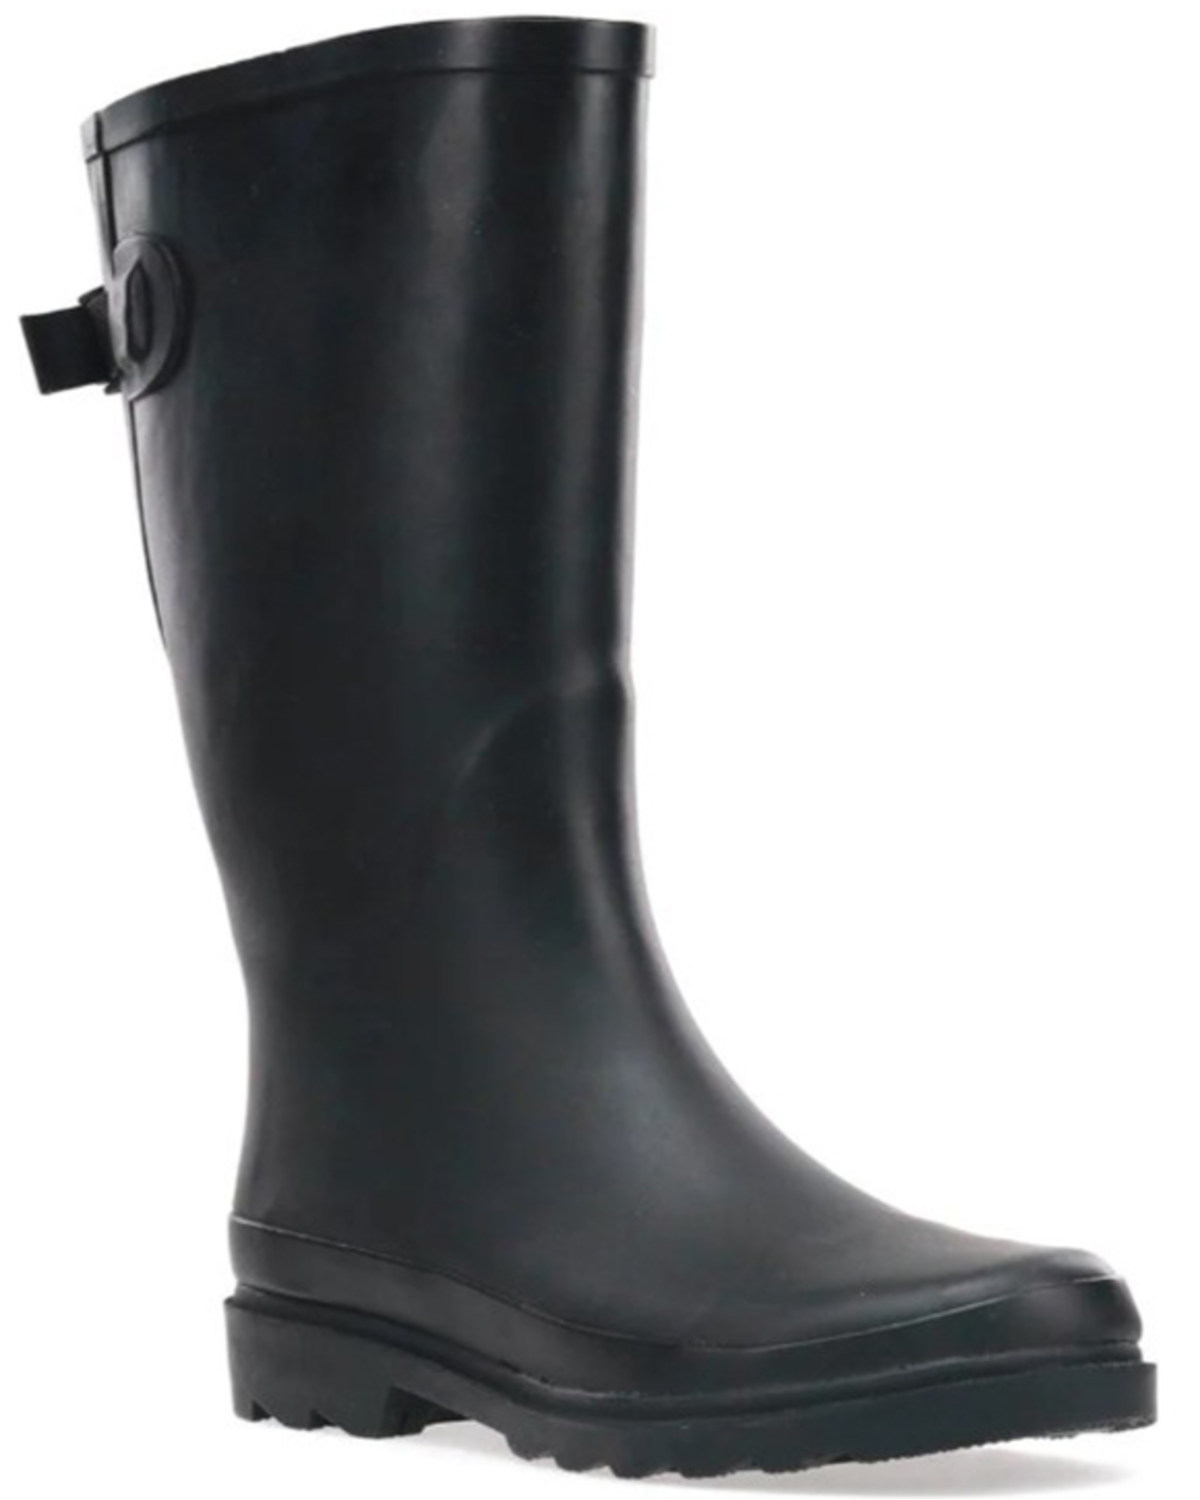 Western Chief Women's Solid Vari-Fit Rain Boots - Round Toe